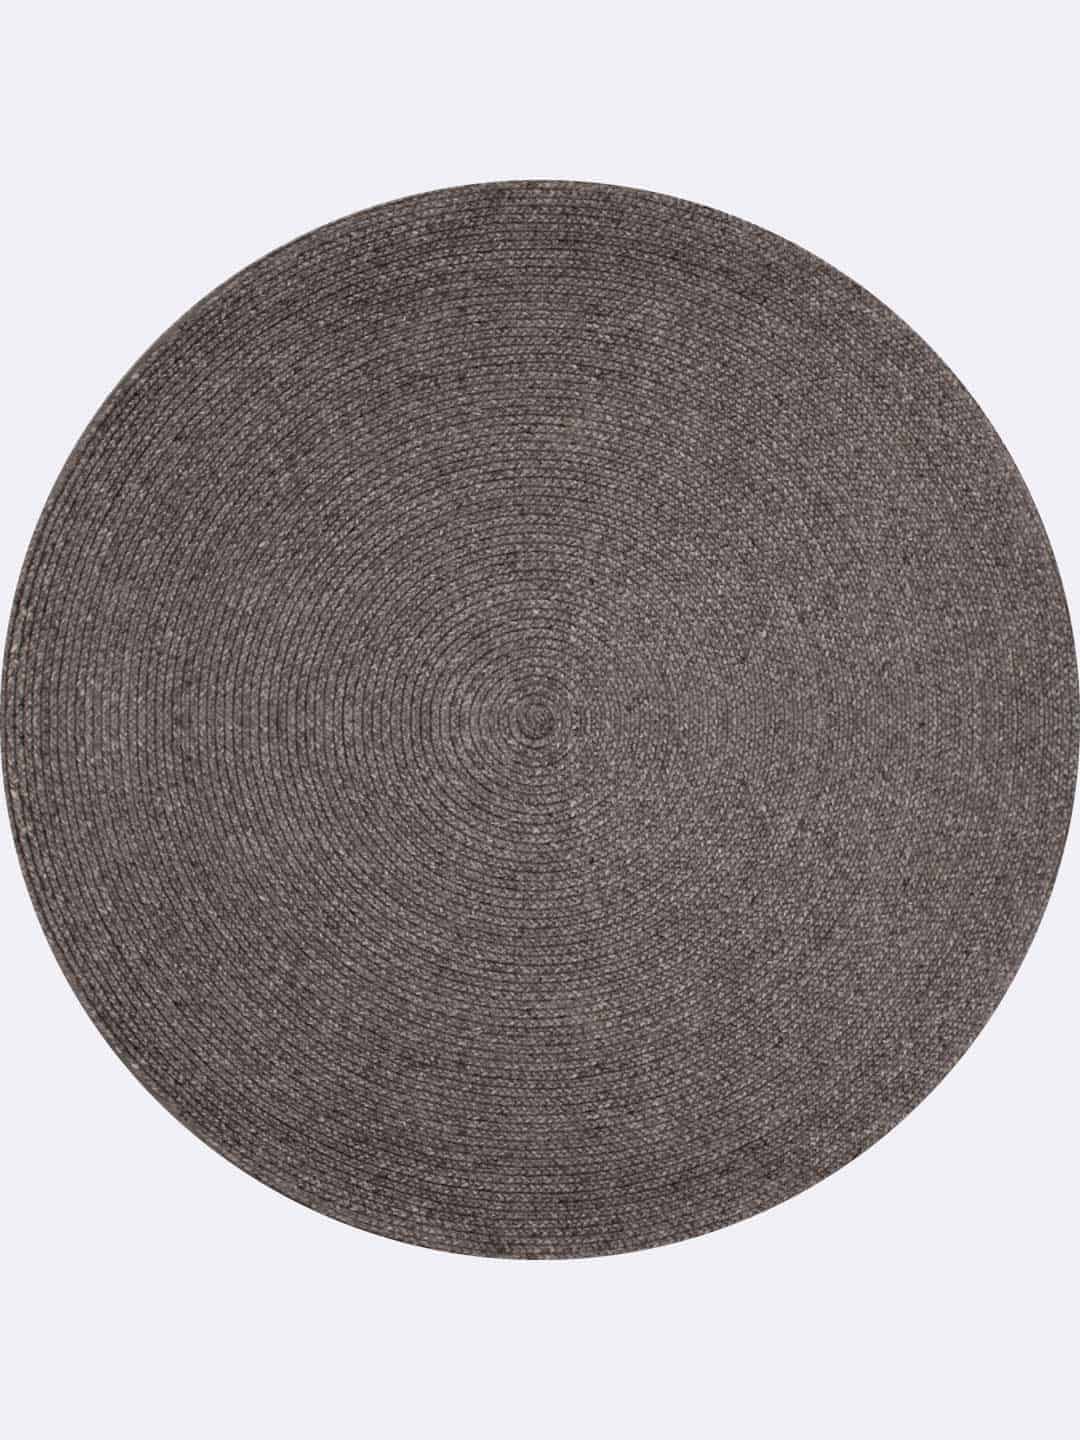 paddington-charcoal-grey-round-stans-rug-centre-wool-artsilk